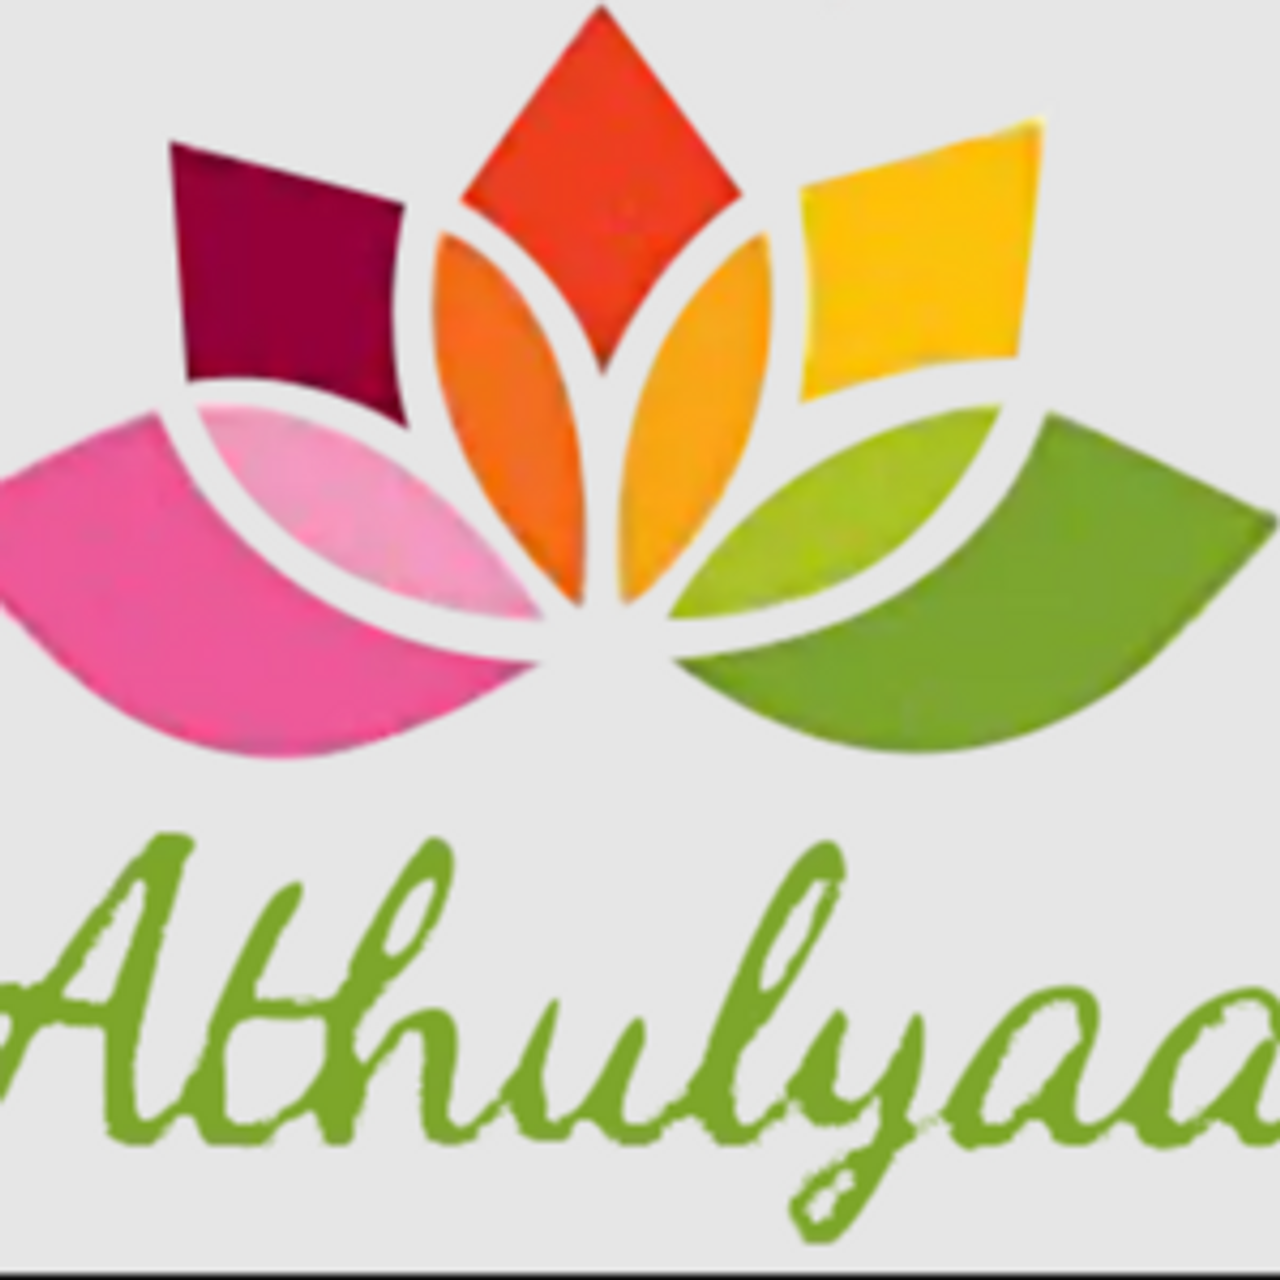 athulyaa1